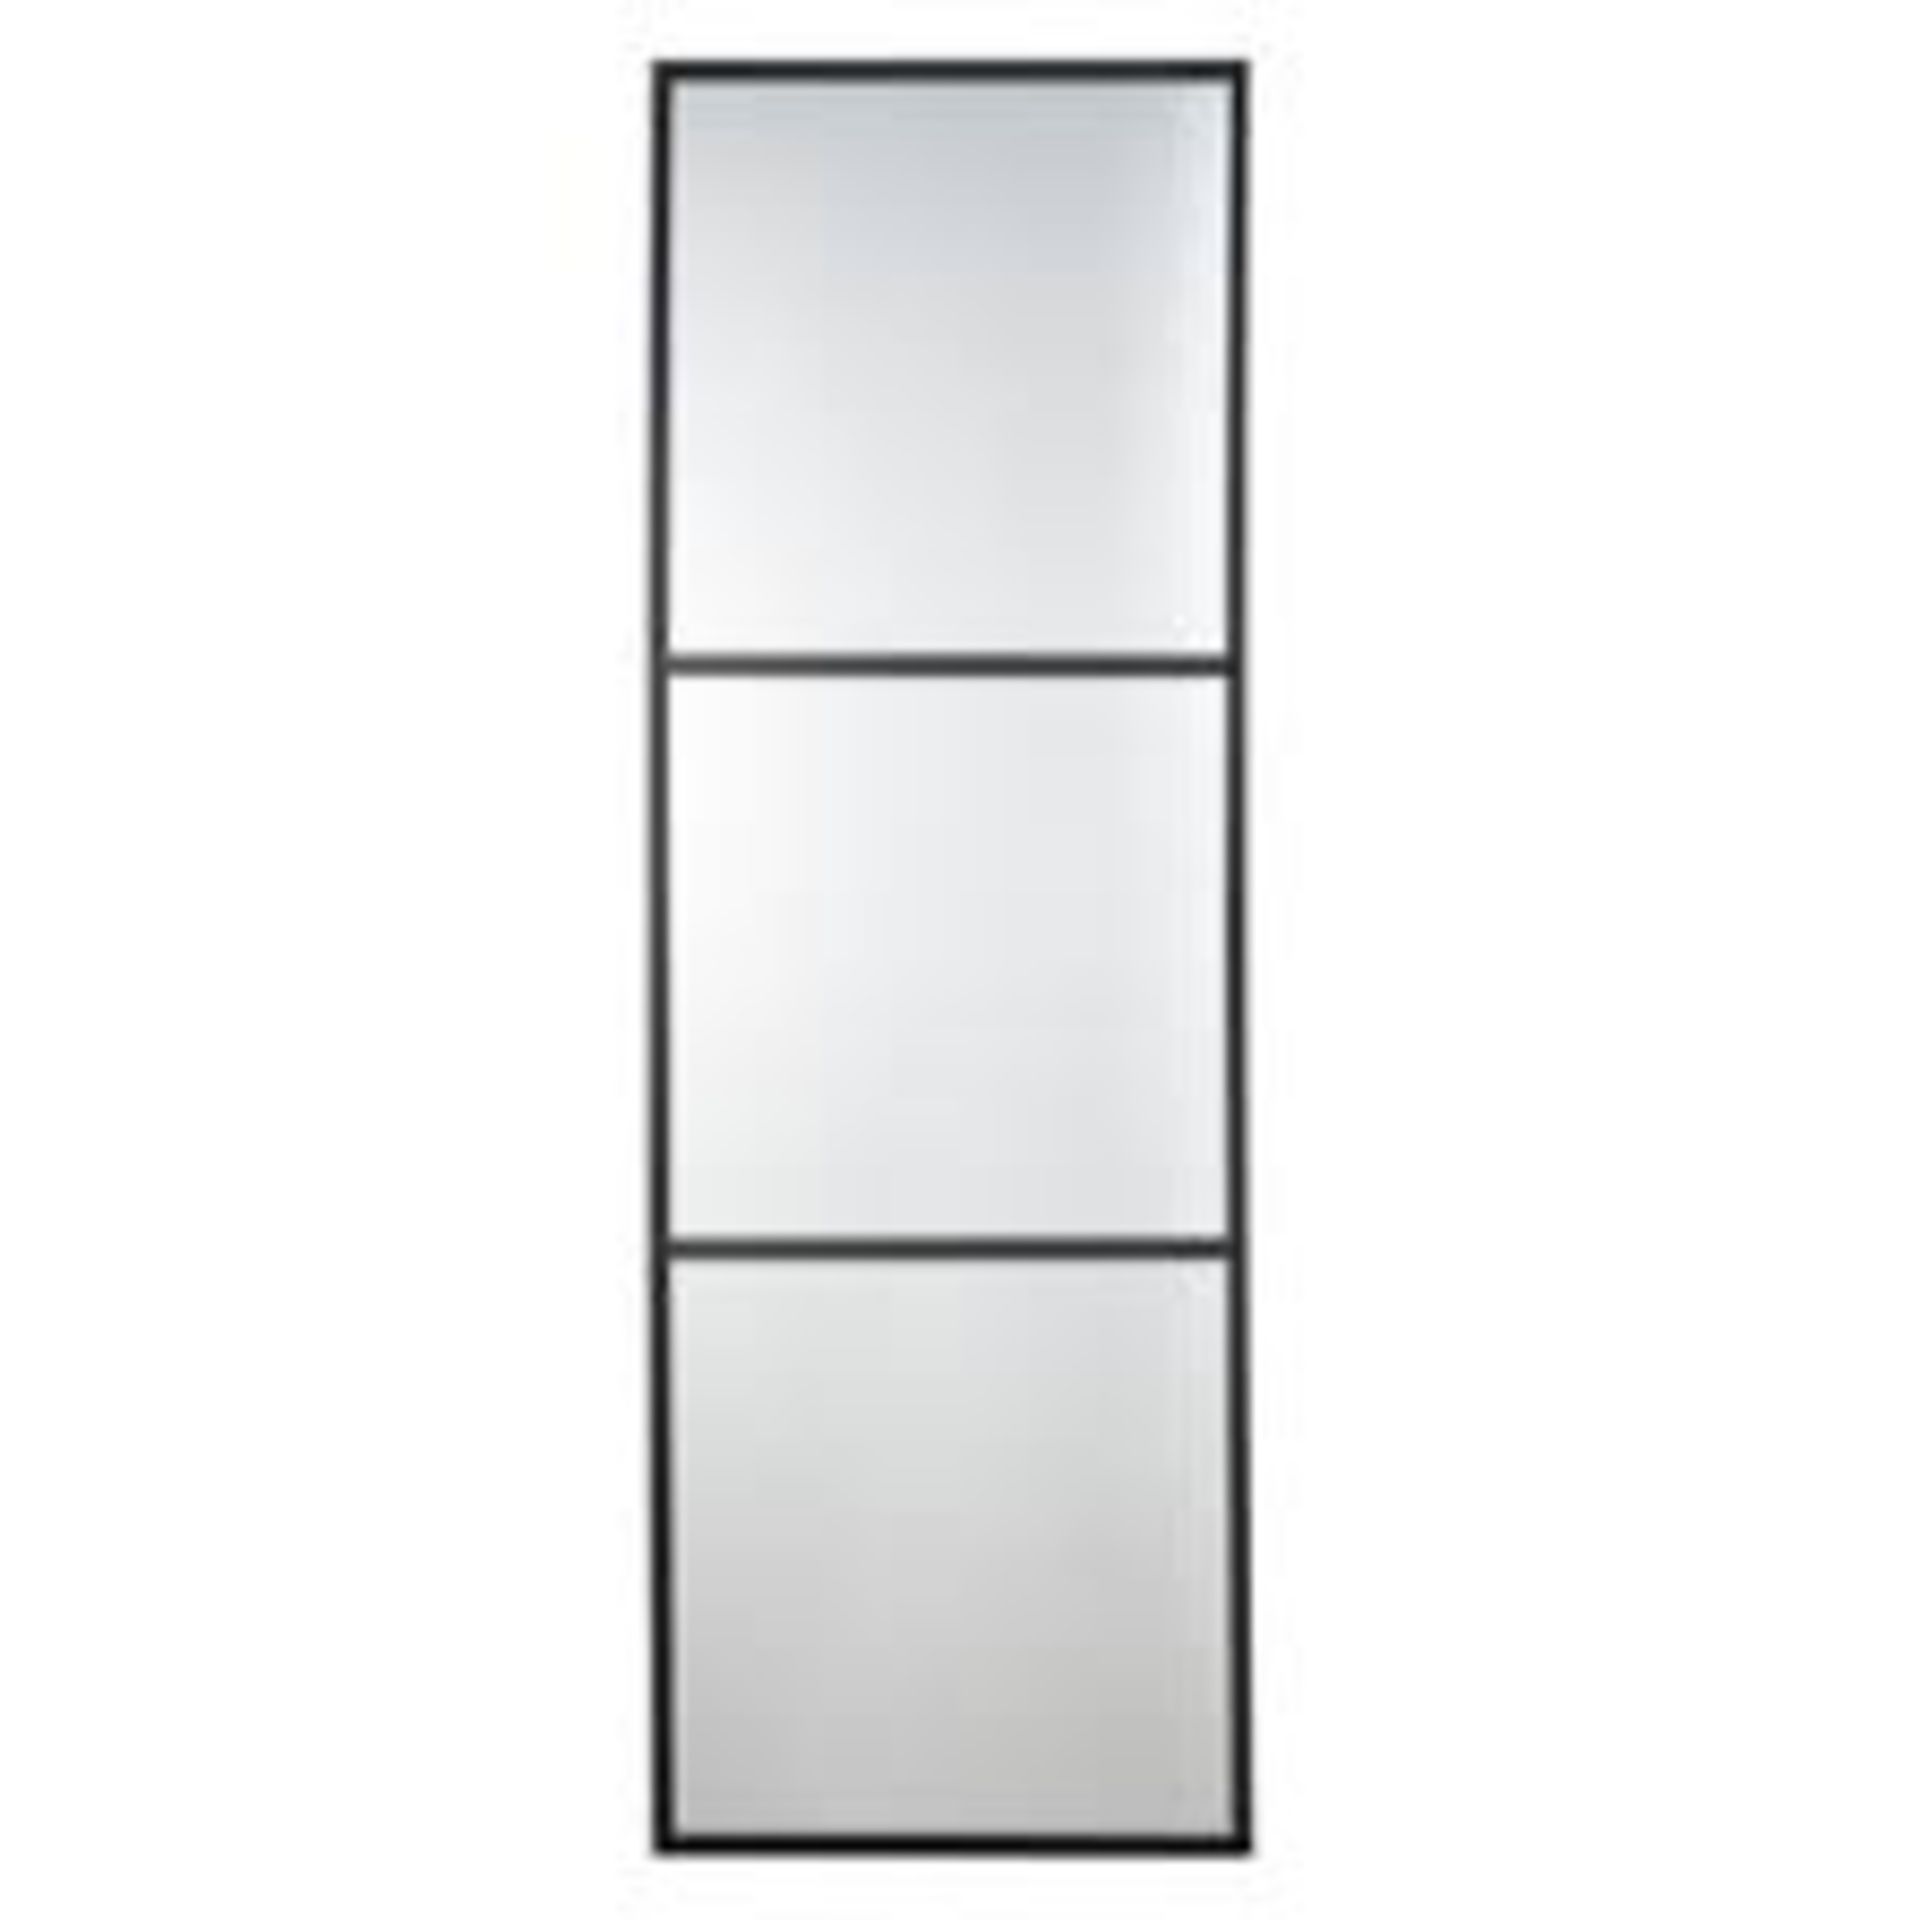 BRAND NEW Black Window Style Floor Standing Mirror 150 X 2 X 40CM RRP £310